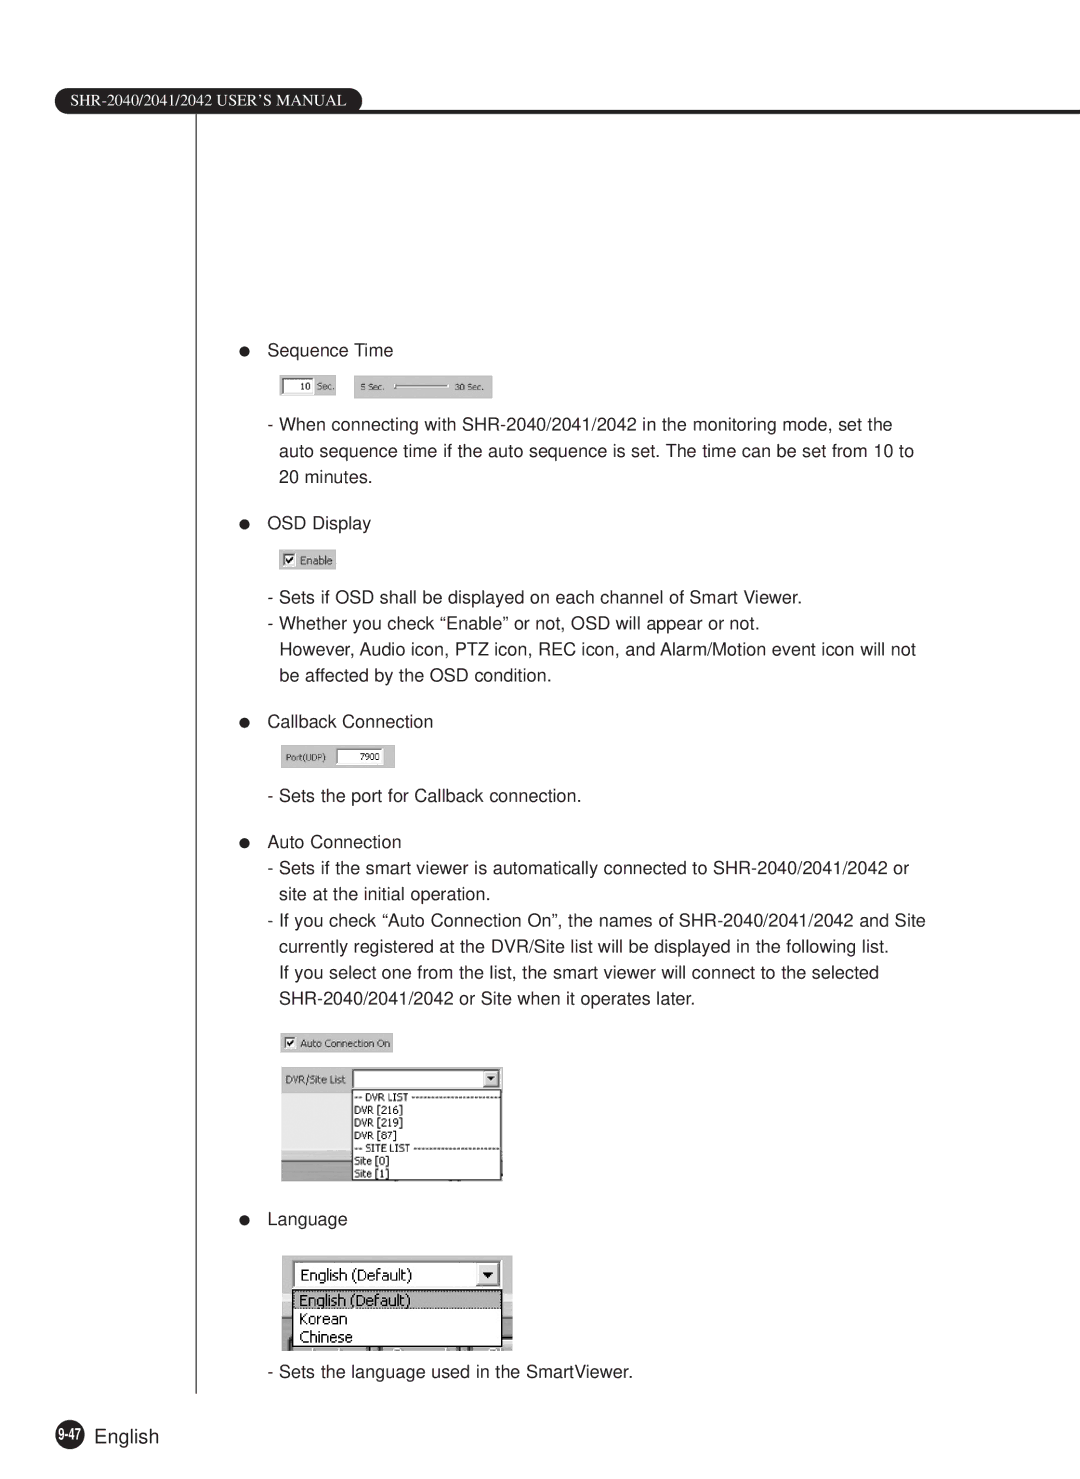 Samsung SHR-2040N, SHR-2040P manual 47English 